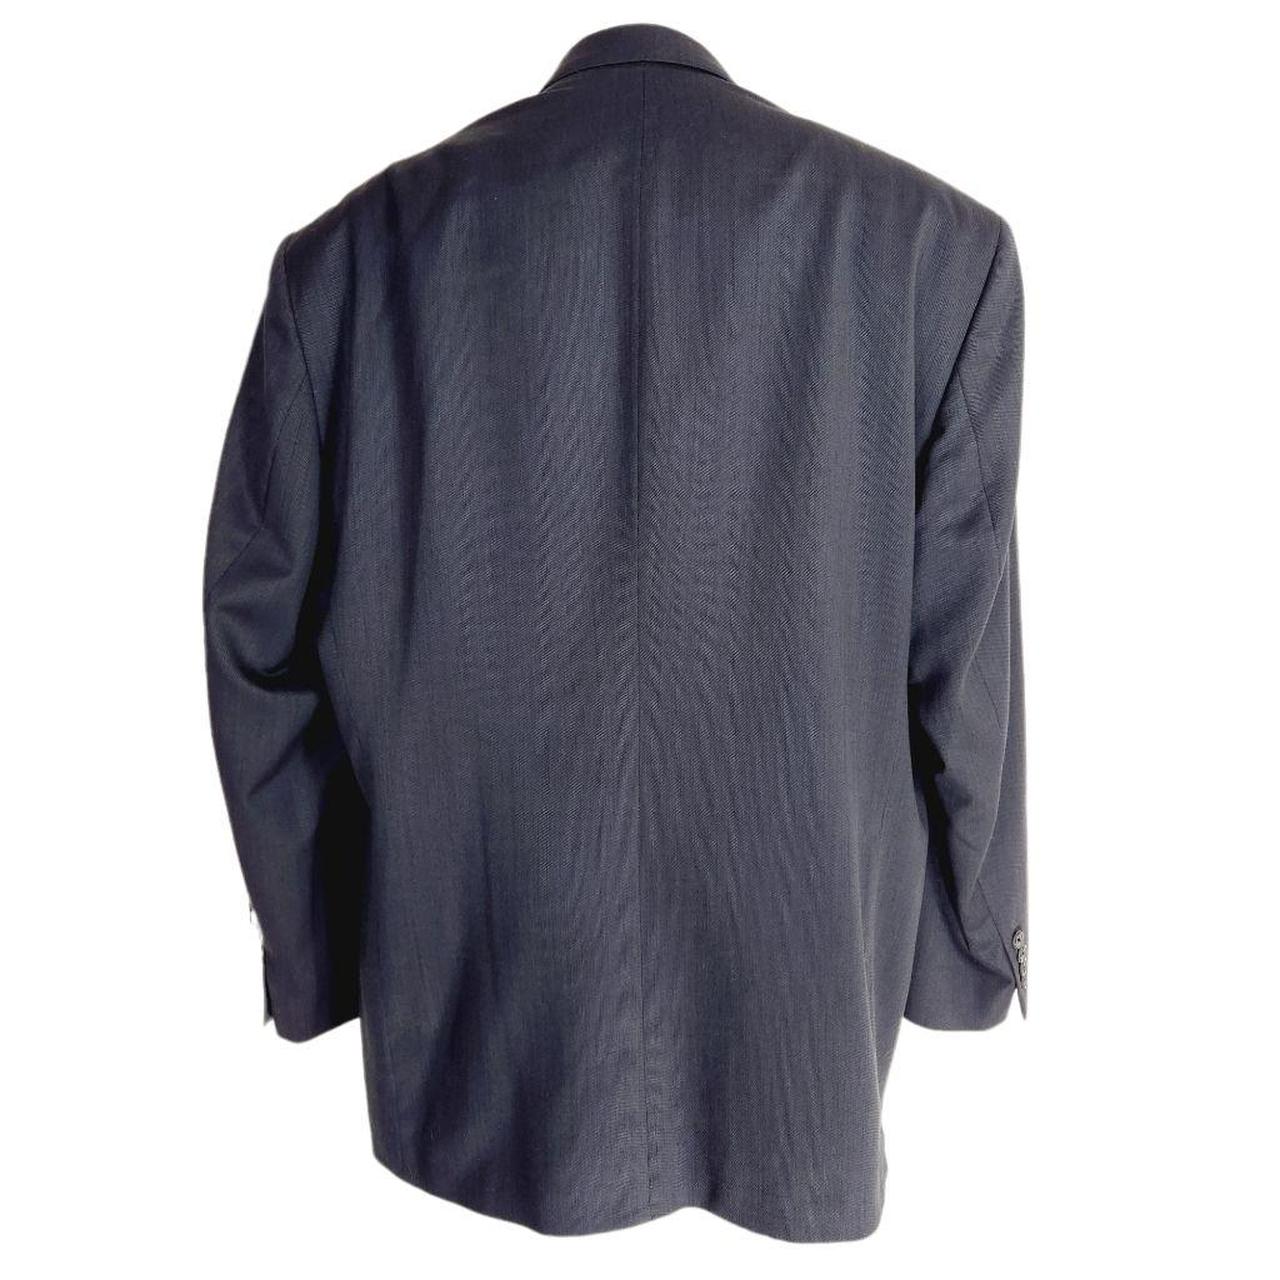 Product Image 3 - Kasper black blazer suit jacket